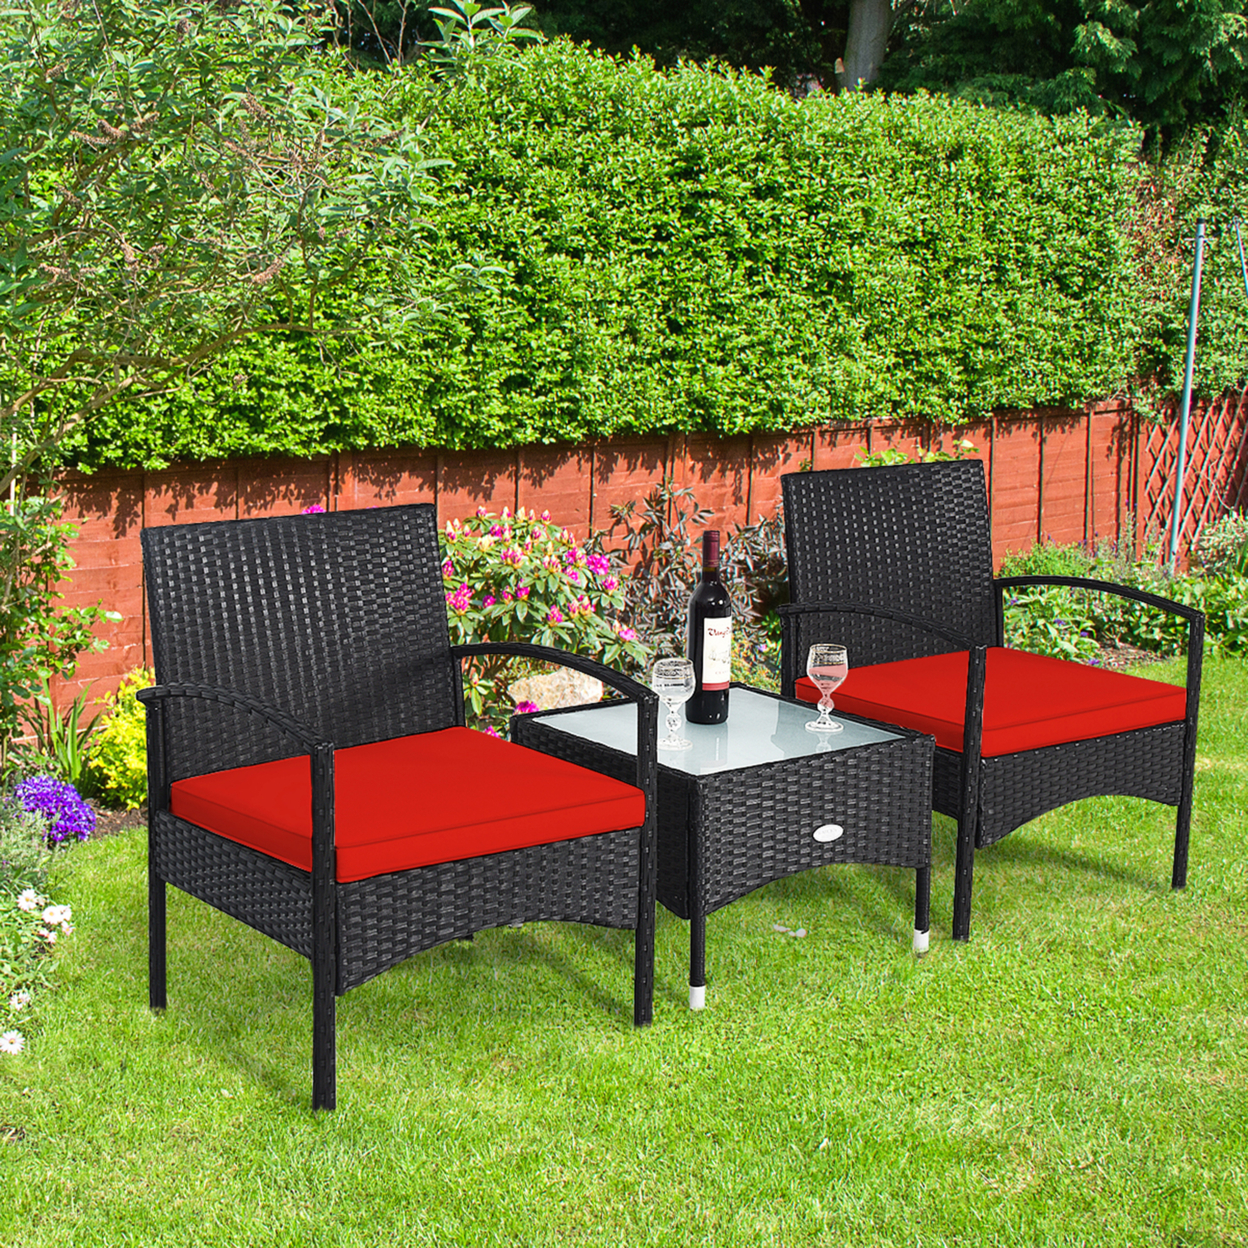 3 PCS Patio Wicker Rattan Furniture Set Coffee Table & 2 Rattan Chair W/ Cushion Red